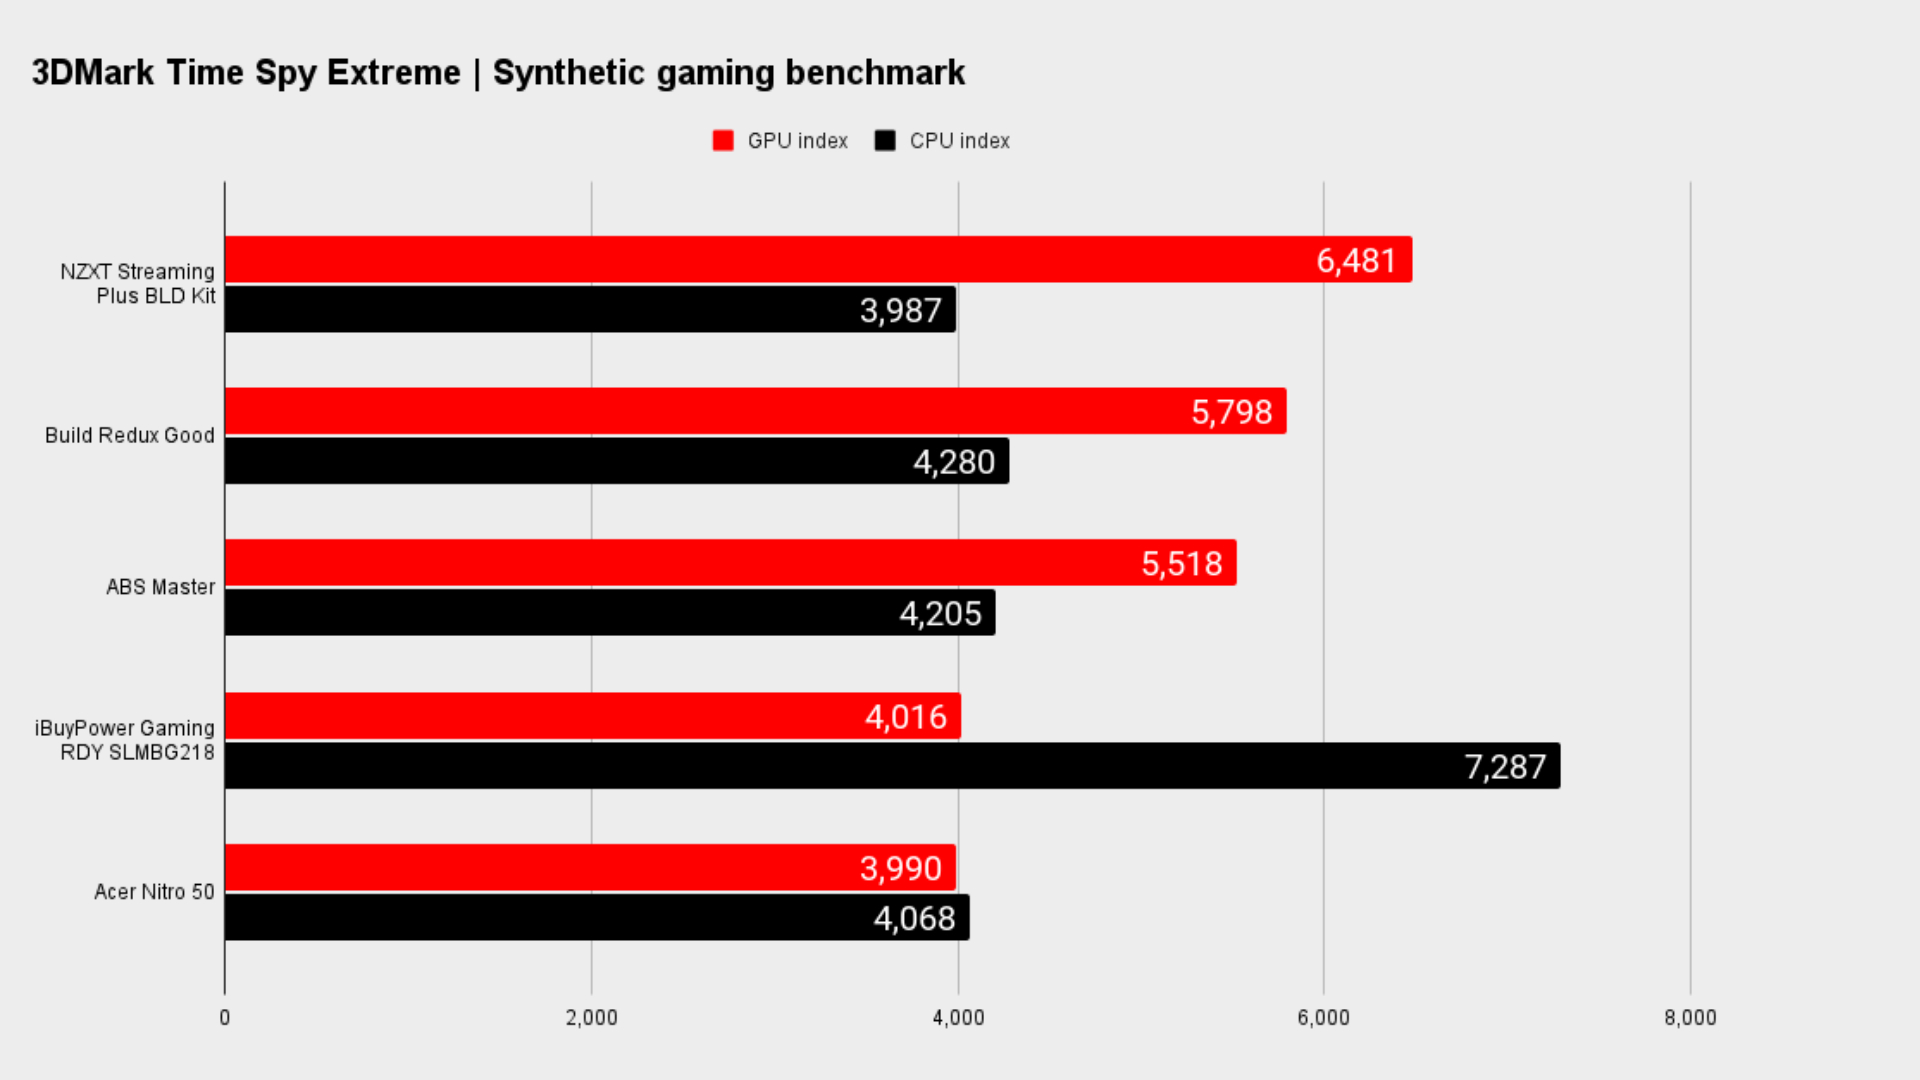 Gaming benchmarks for gaming PCs